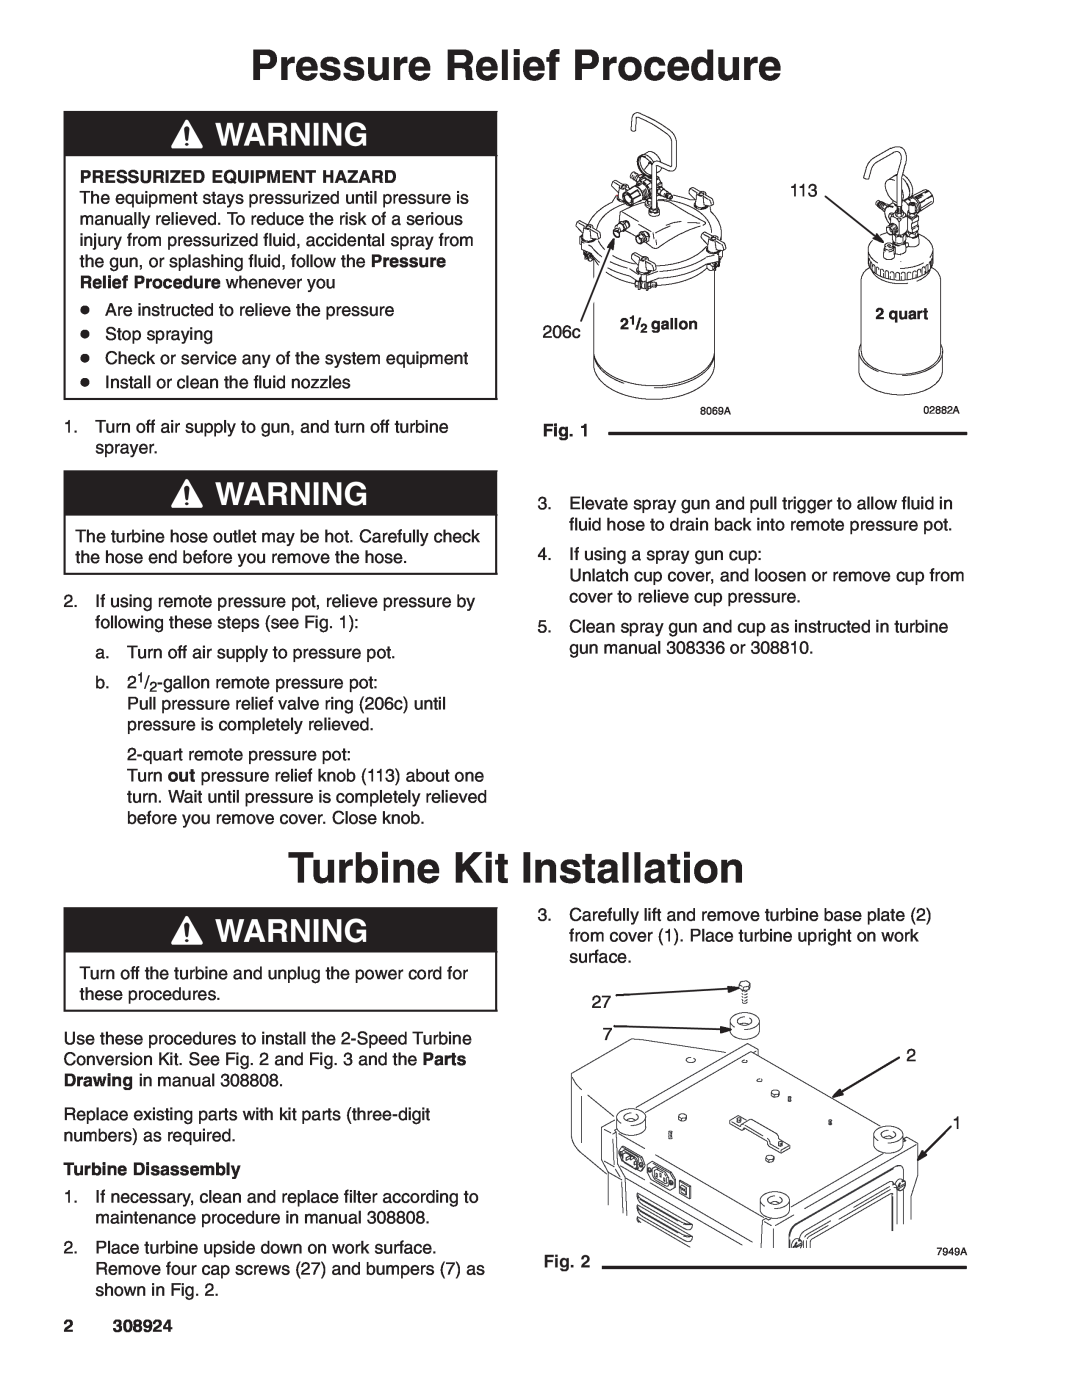 Graco Series A, 241123 manual Pressure Relief Procedure, Turbine Kit Installation, Pressurized Equipment Hazard, 206c 